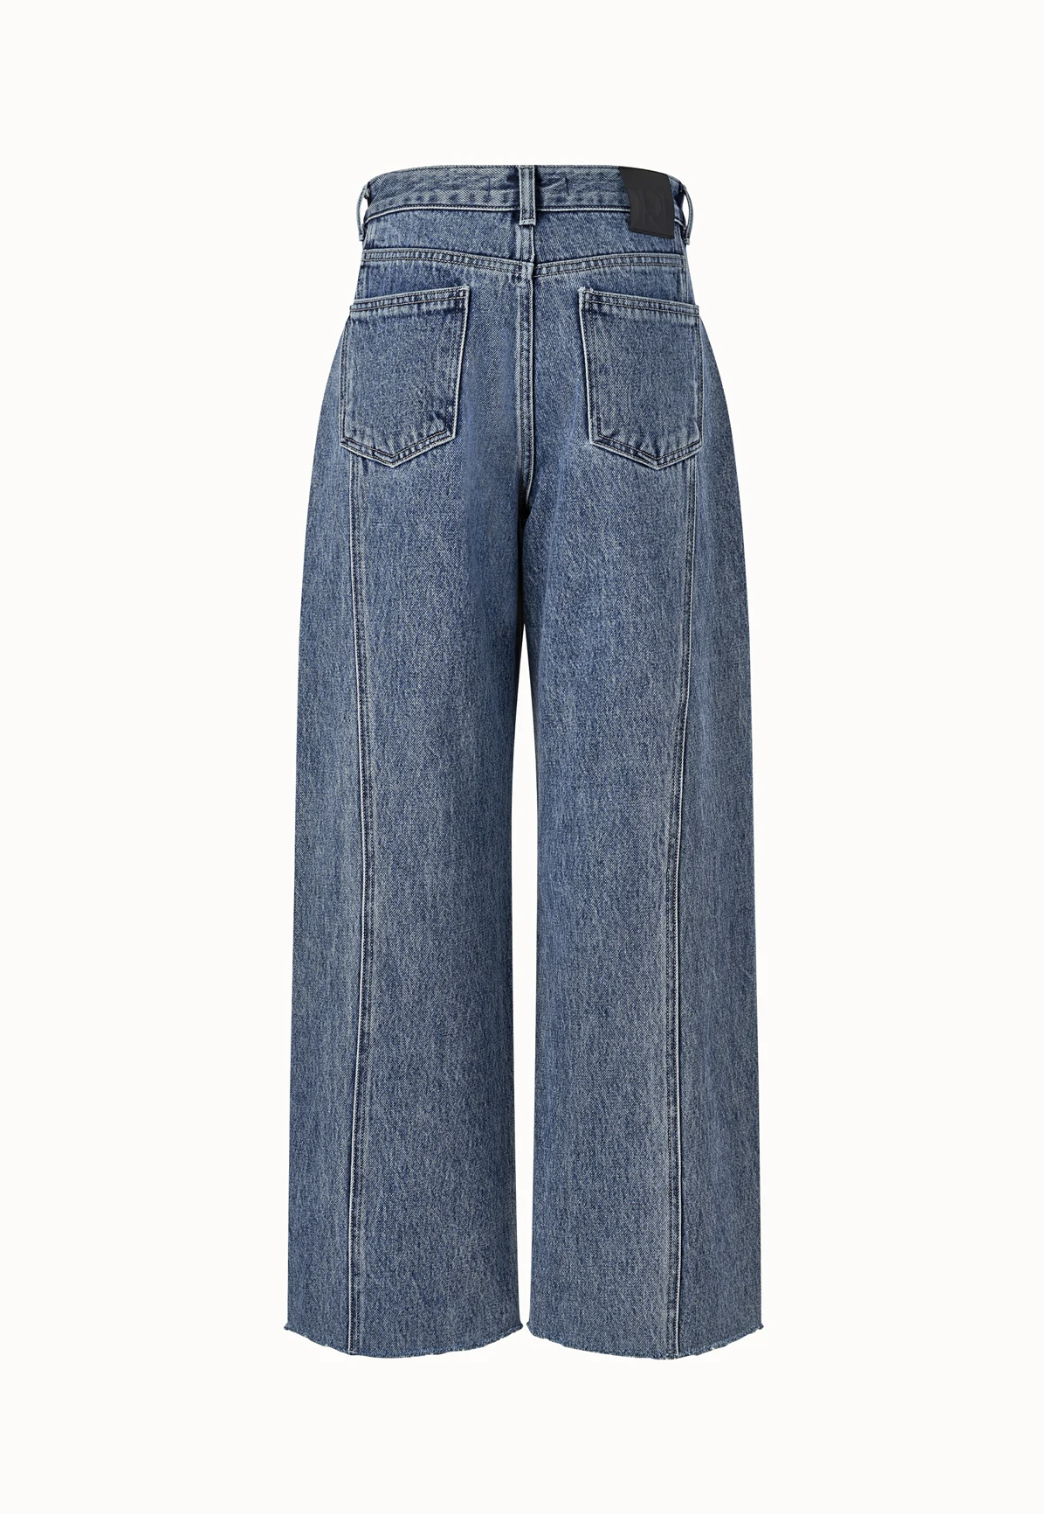 751 Front Seam Denim Jeans